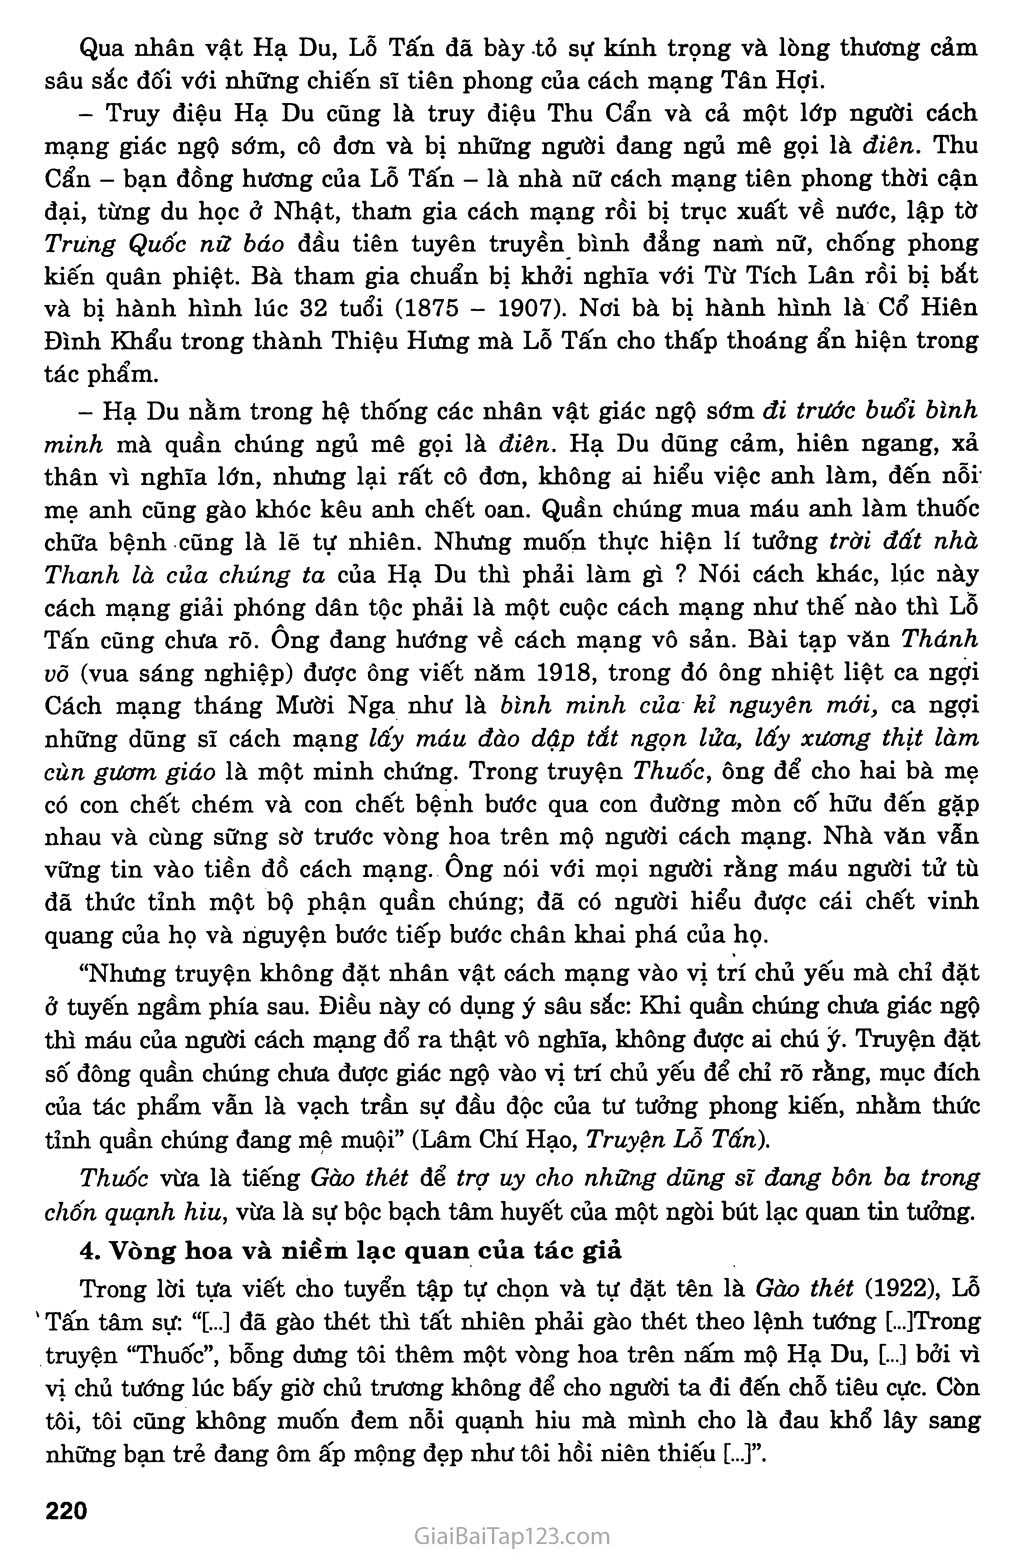 Thuốc (Lỗ Tấn, 1919) trang 4